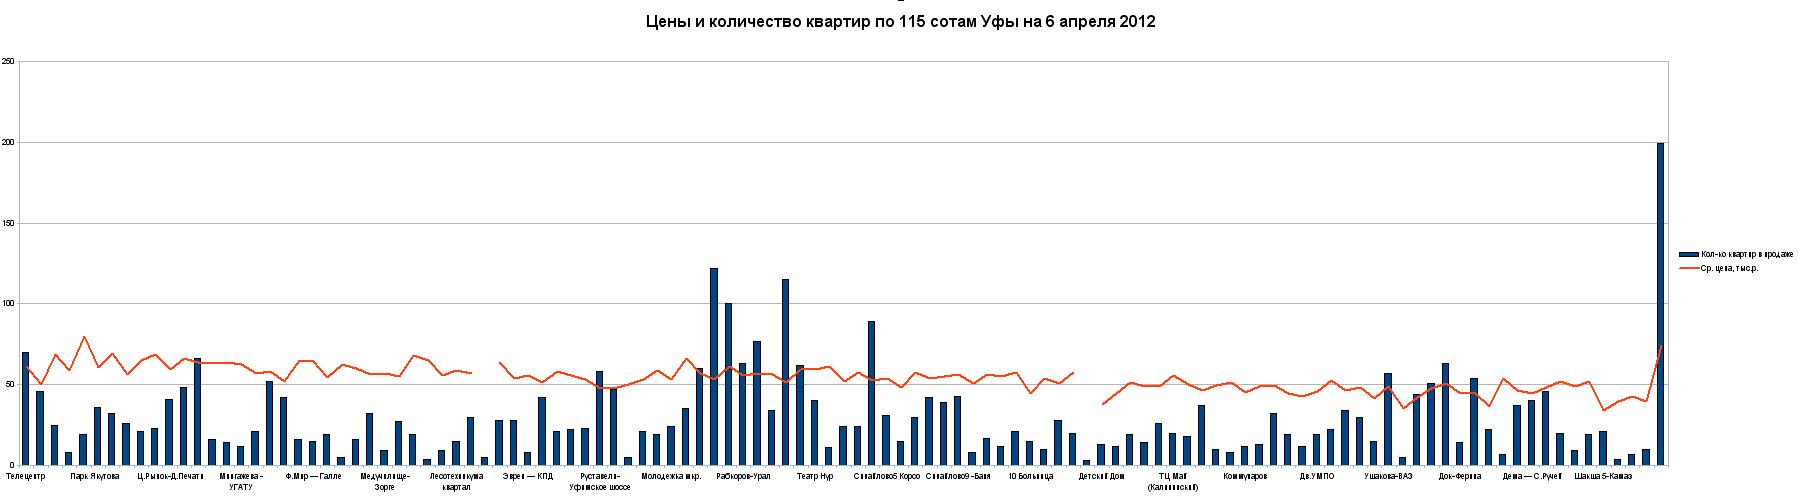 Количество квартир и цены по микрорайонам Уфы на 6 апреля 2012